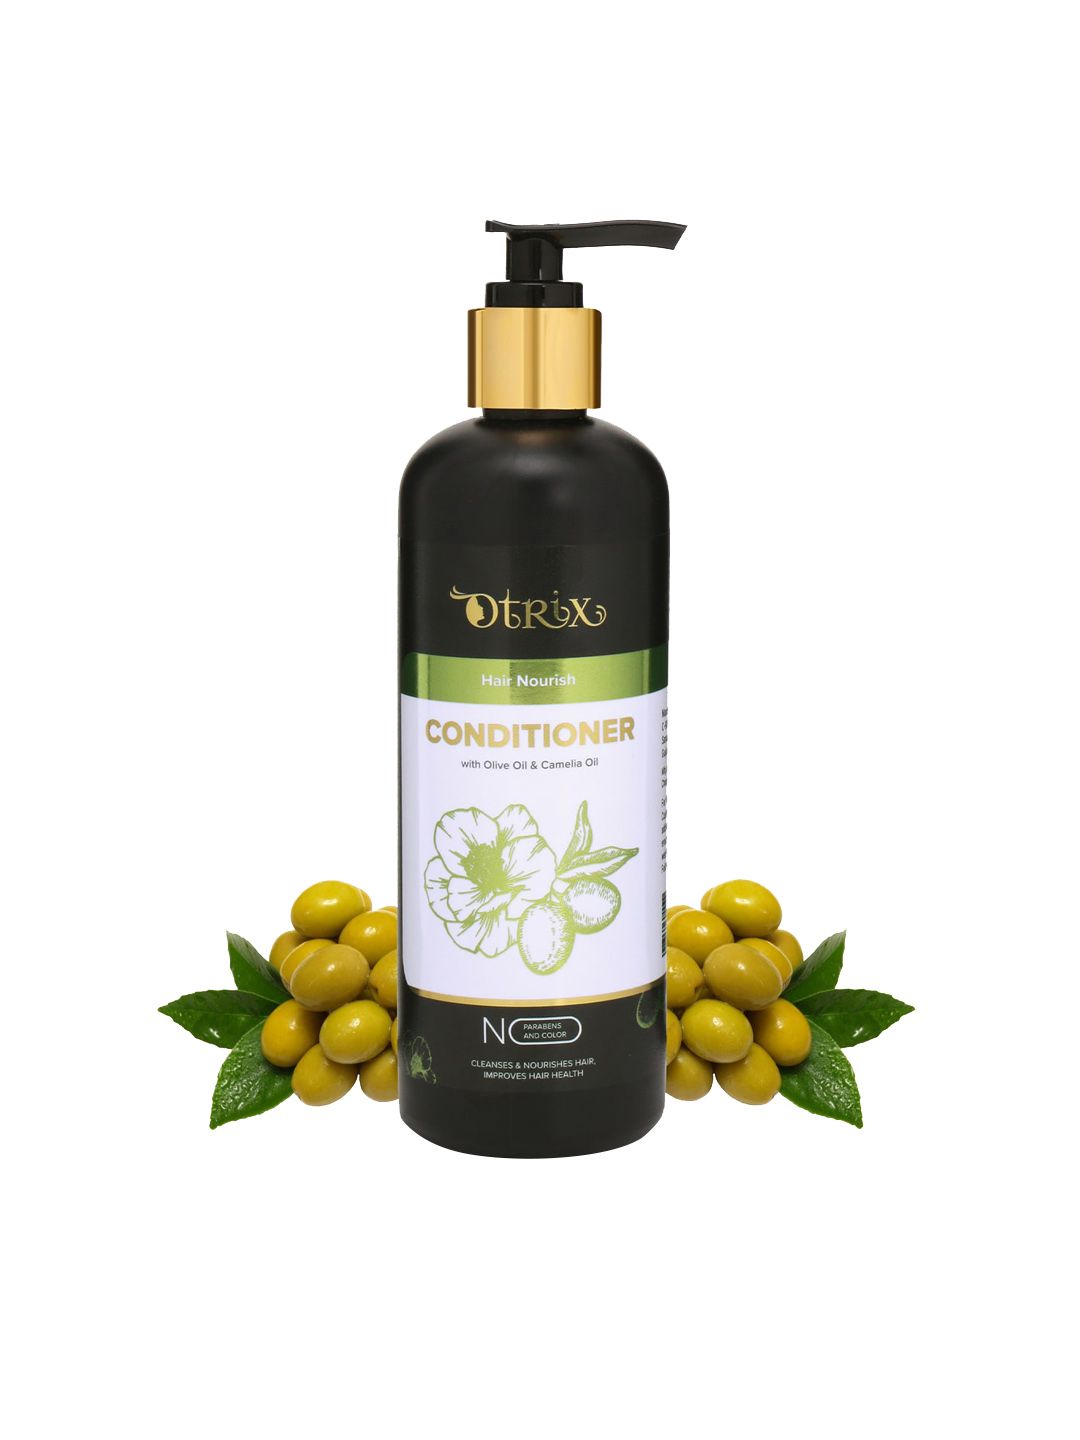 Otrix Hair Nourish Conditioner with Olive Oil & Camelia Oil - 300ml Price in India